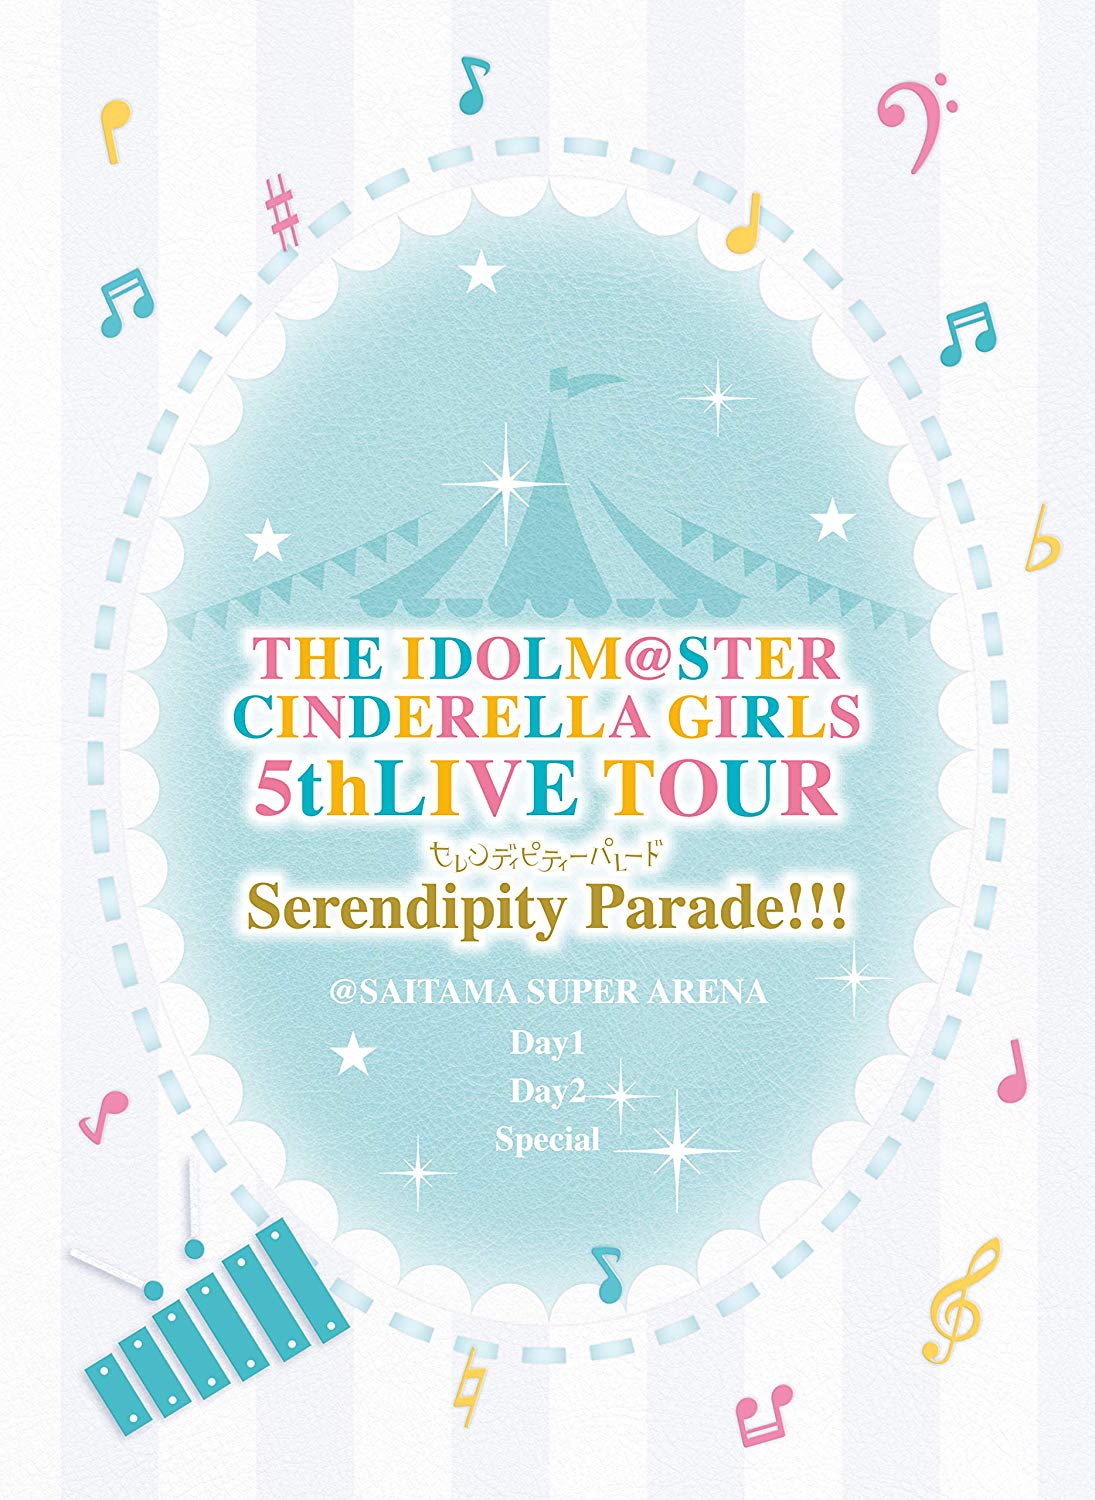 THE IDOLM@STER CINDERELLA GIRLS 5thLIVE TOUR Serendipity Parade!!!@SAITAMA SUPER ARENA